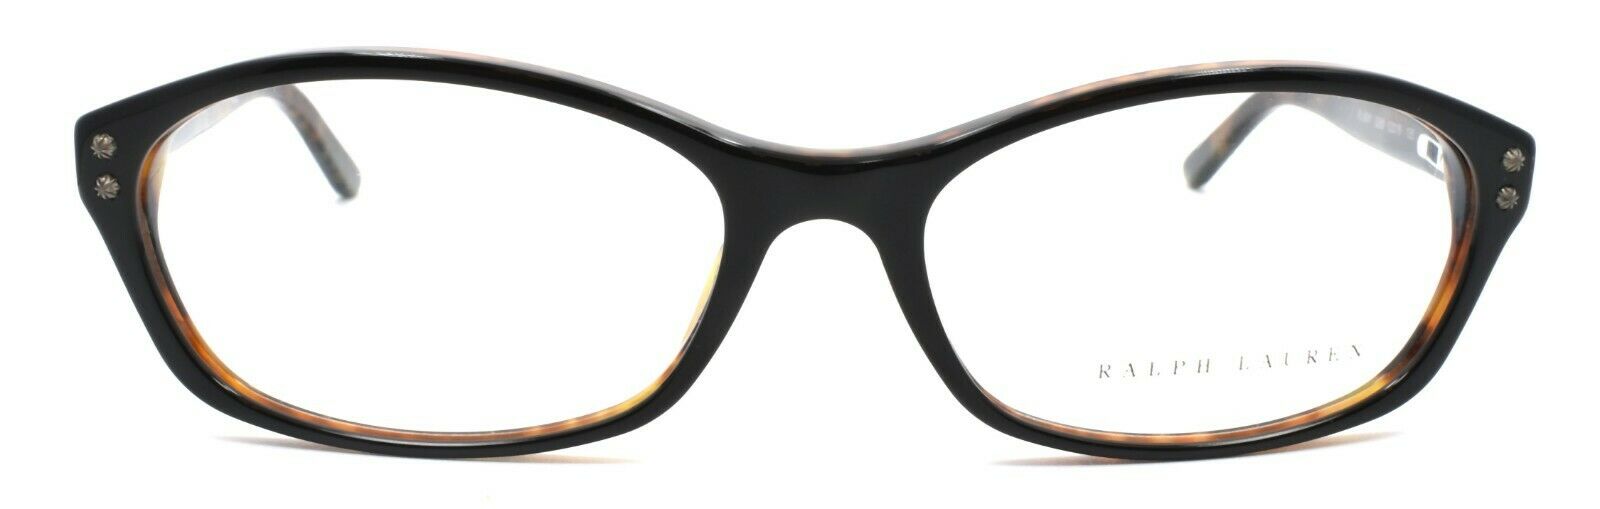 2-Ralph Lauren RL6091 5260 Women's Eyeglasses Frames 53-16-135 Black / Havana-713132447994-IKSpecs